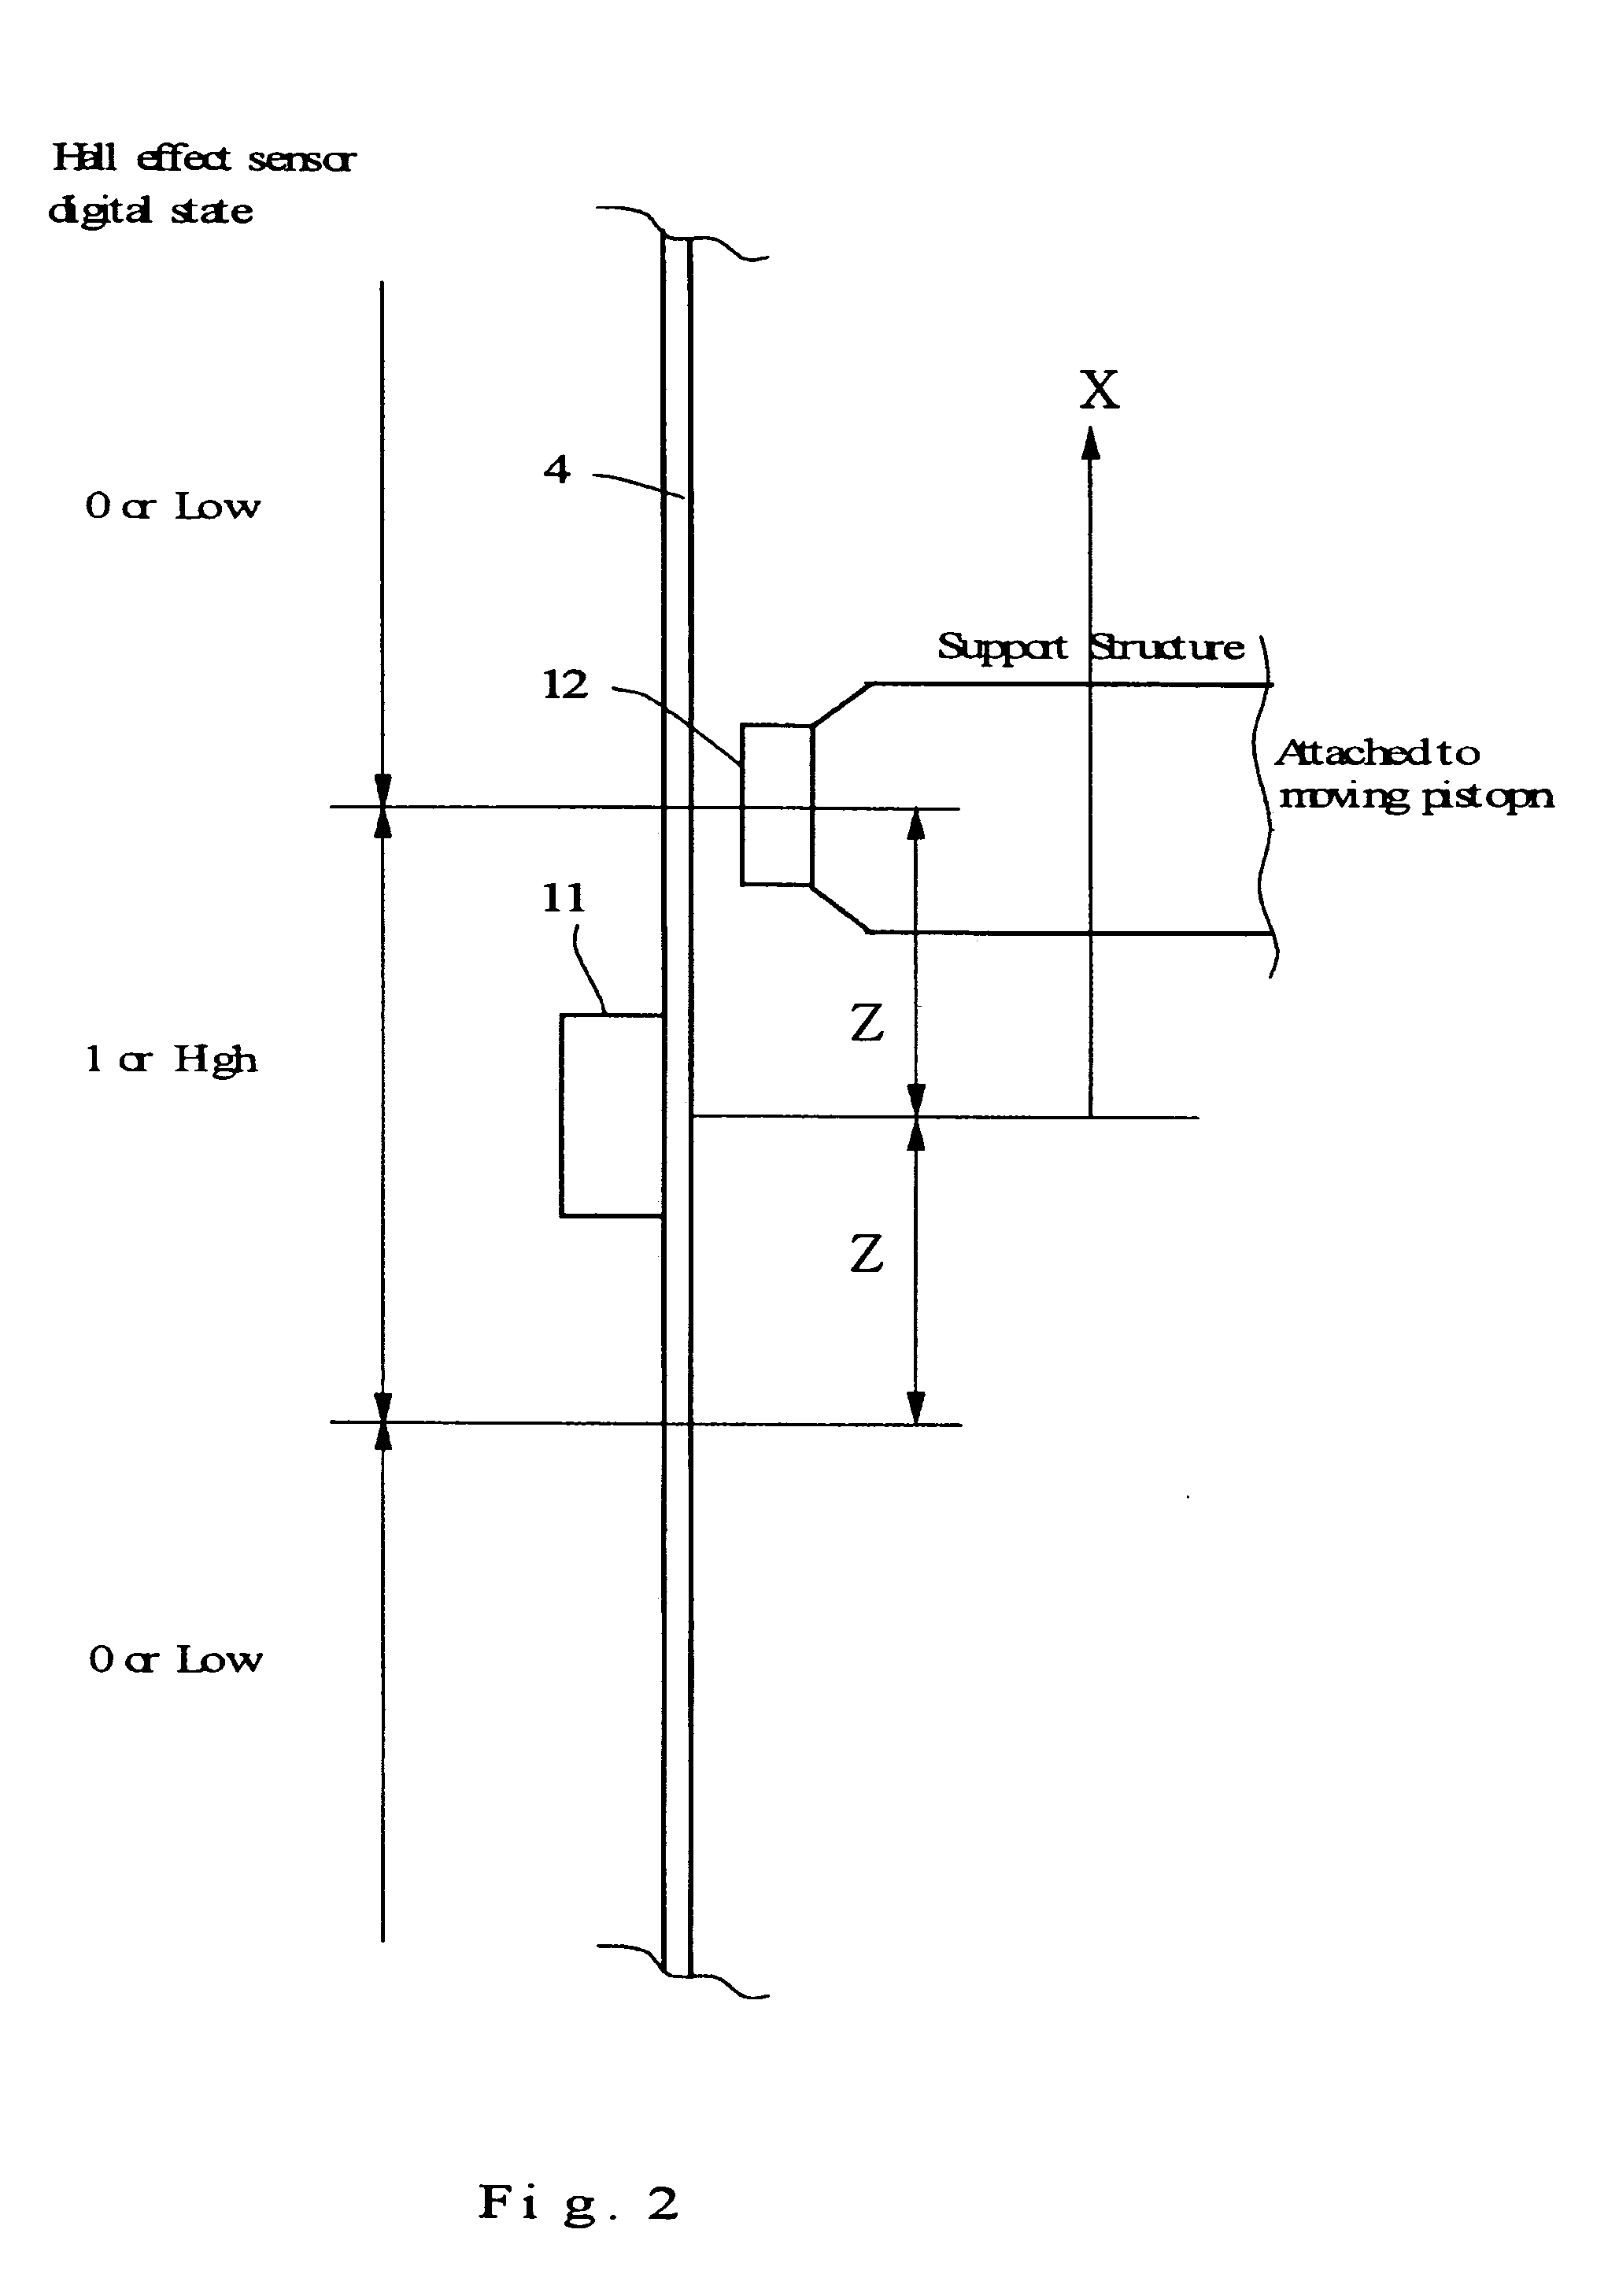 Apparatus for determining free piston position and an apparatus for controlling free piston position